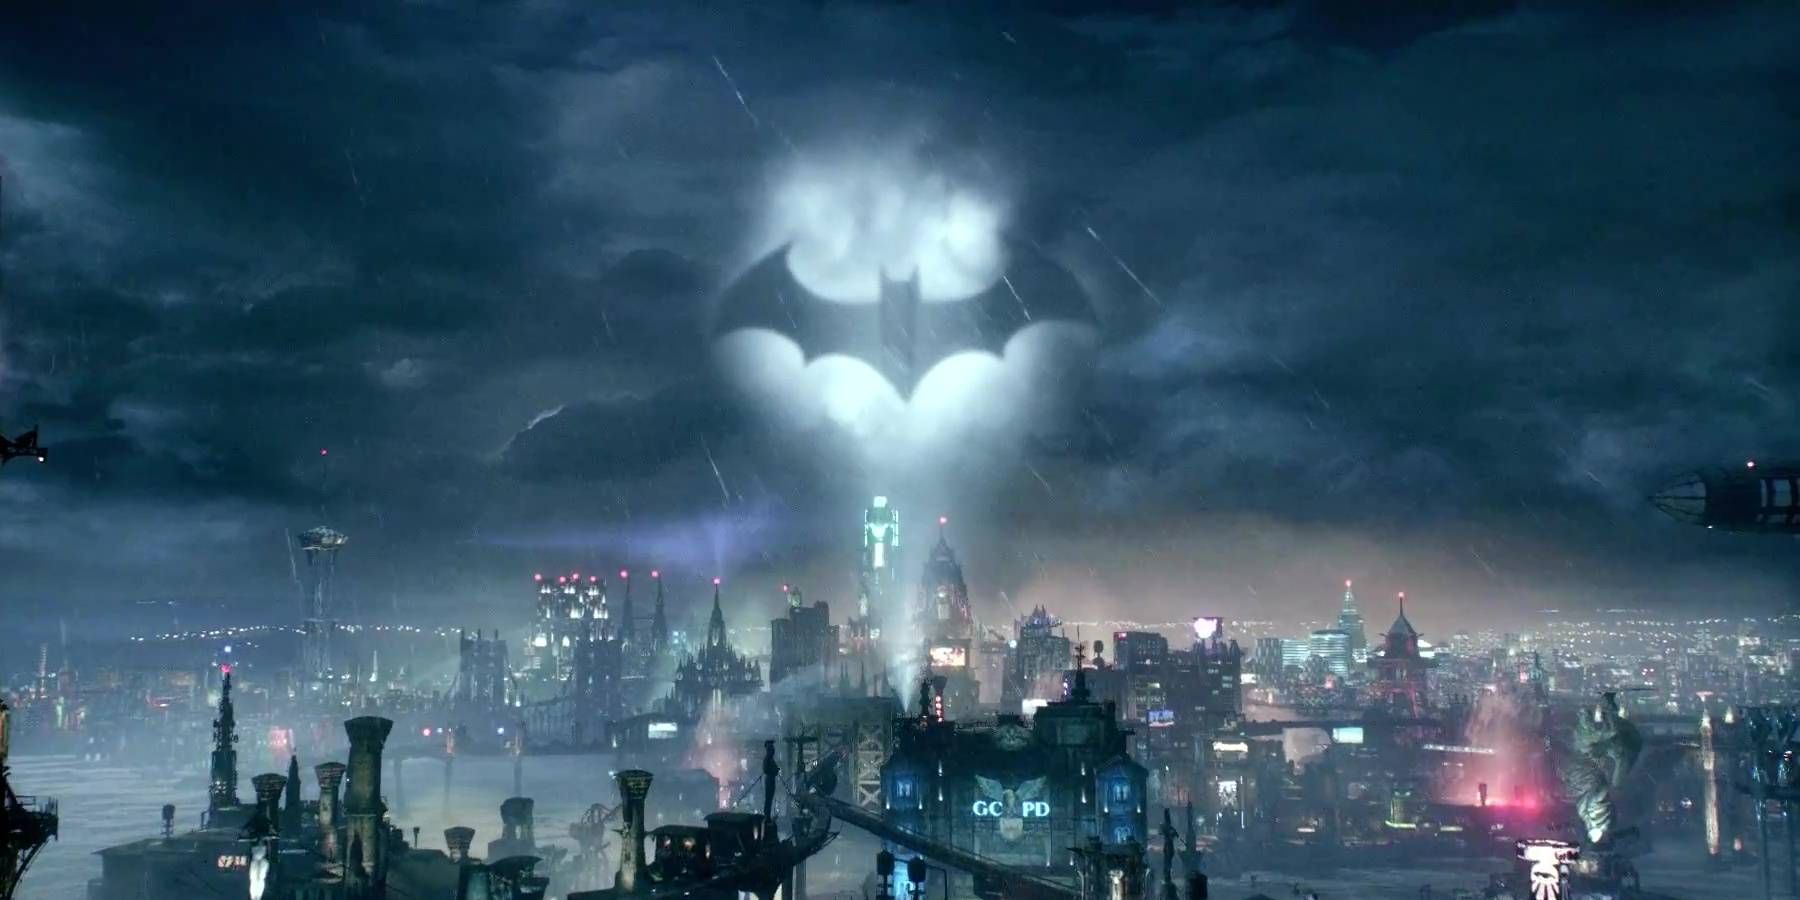 The Bat Signal from Batman: Arkham Knight